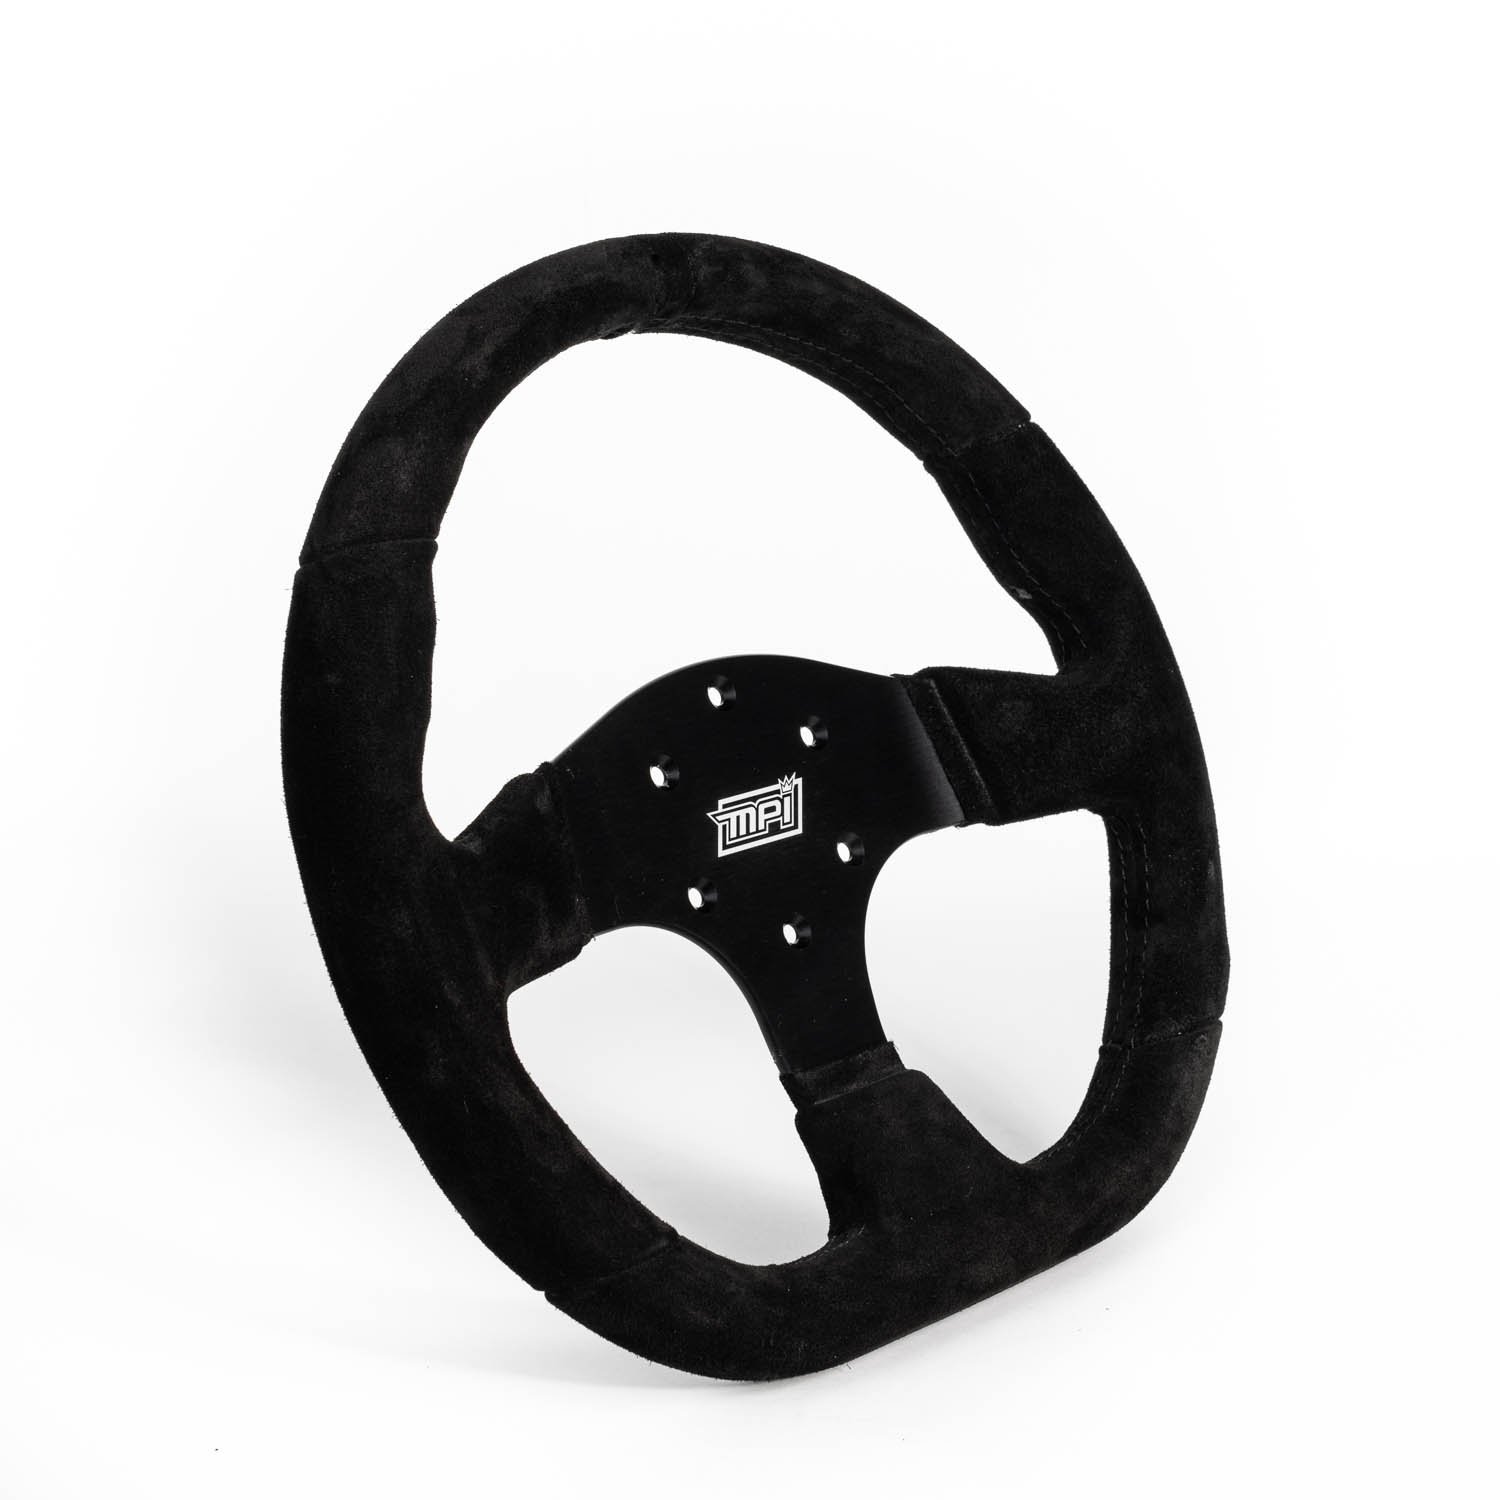 Touring Car/GT/Track Days/SXS Aluminum Steering Wheel 13 in. Diameter